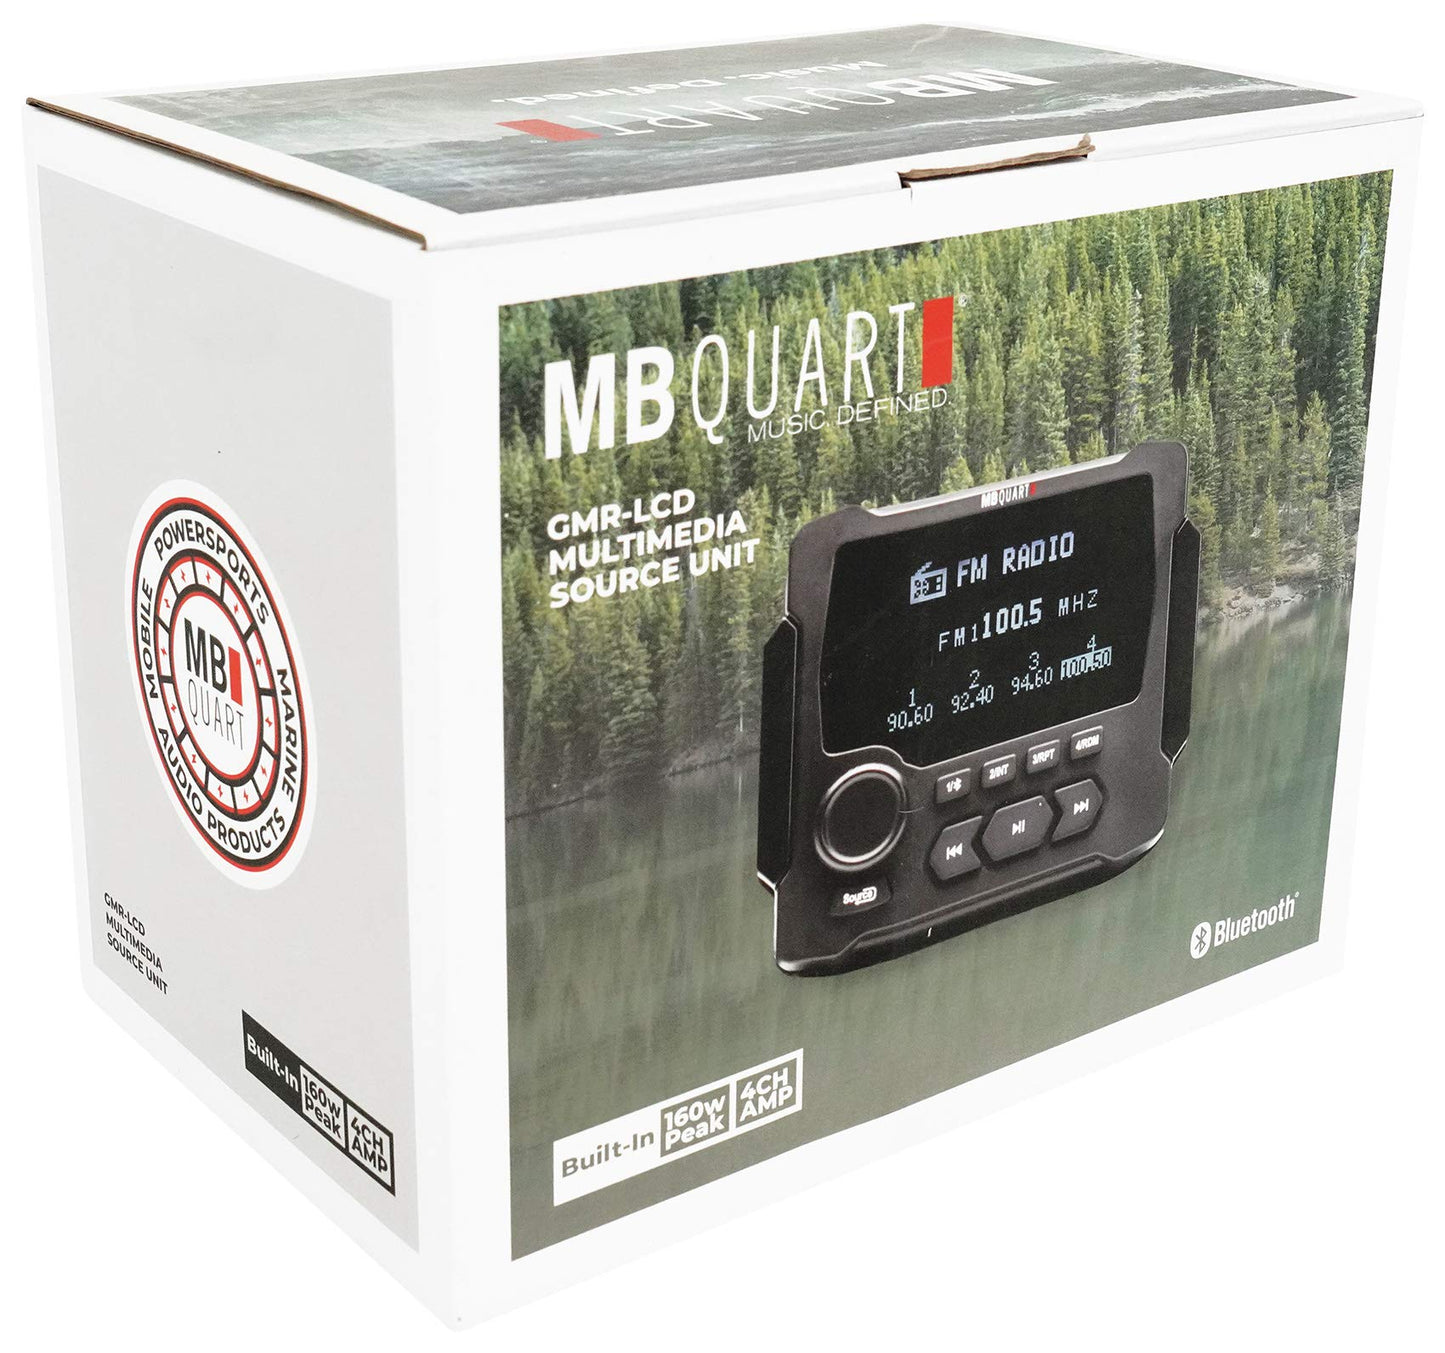 MB Quart GMR-LCD Nautic 160 Watt Powe red Source Unit